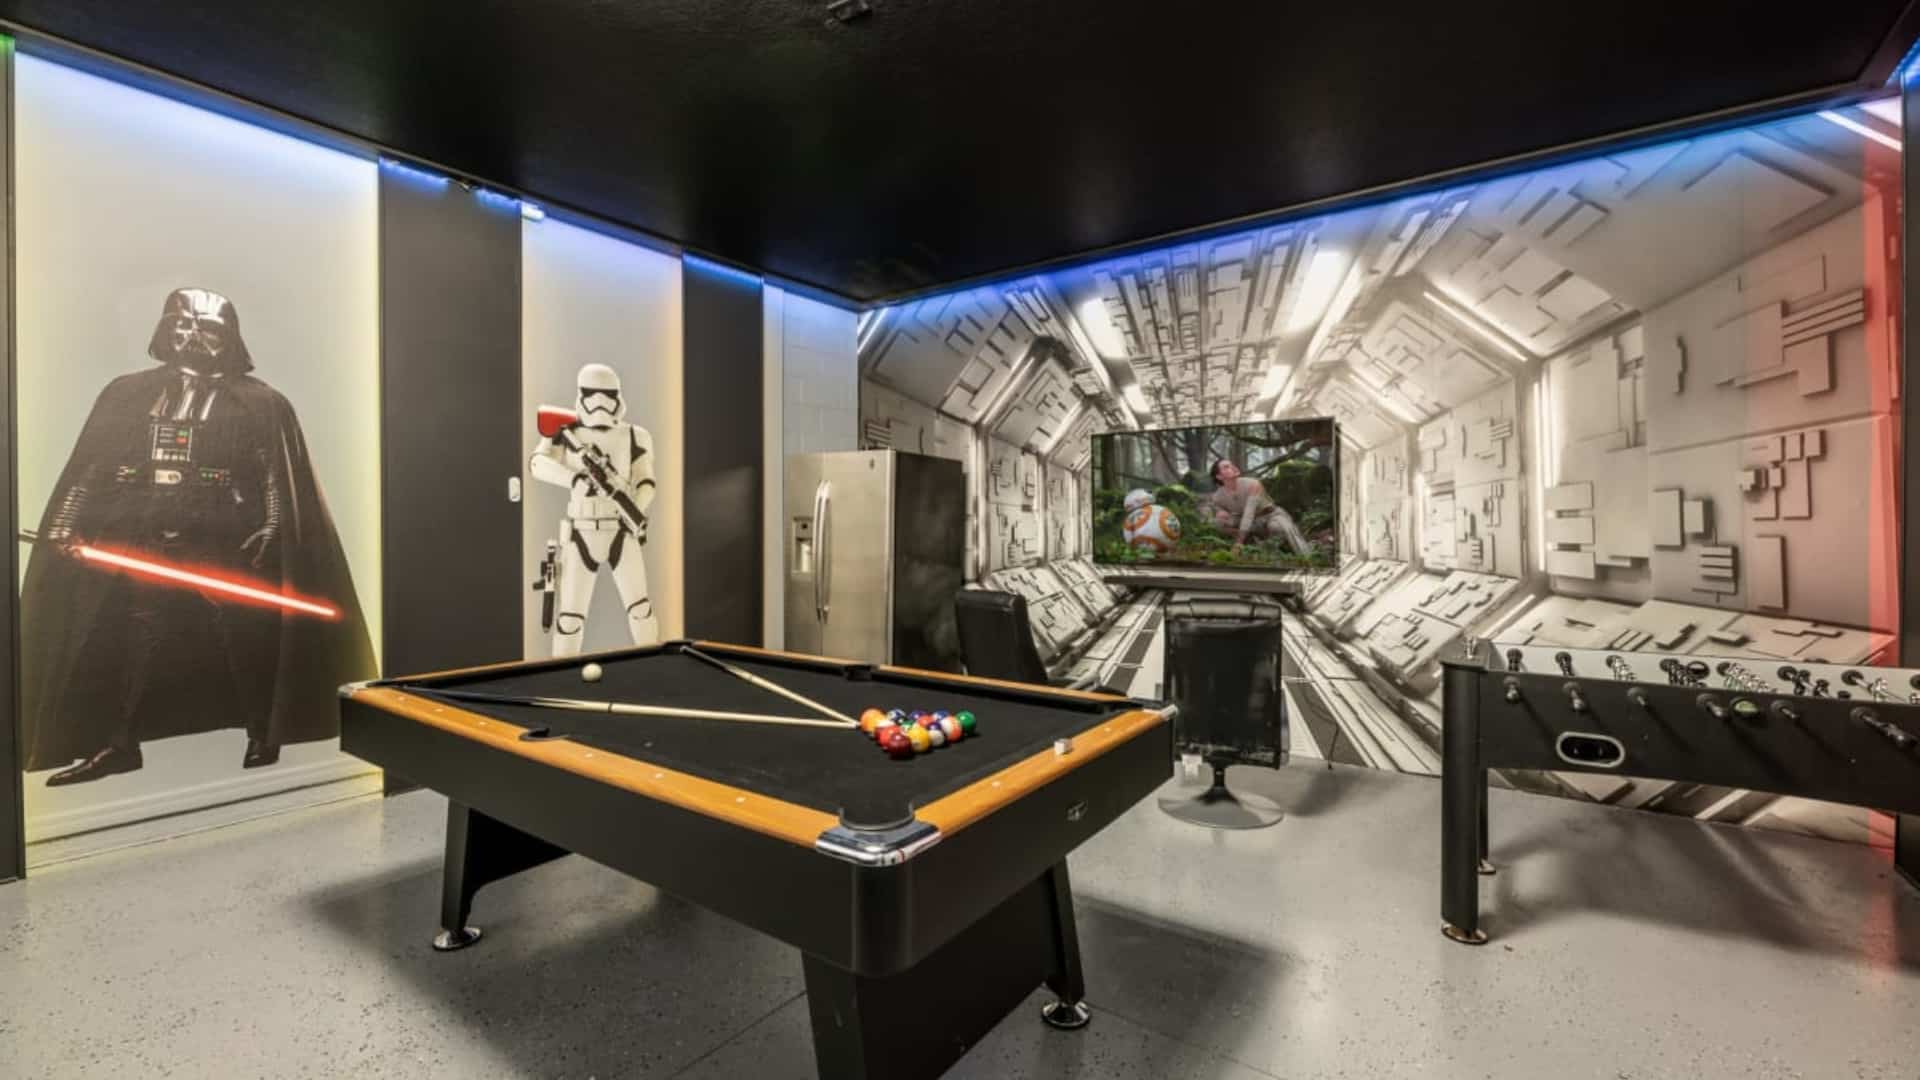 Star Wars Game Room Inspiration